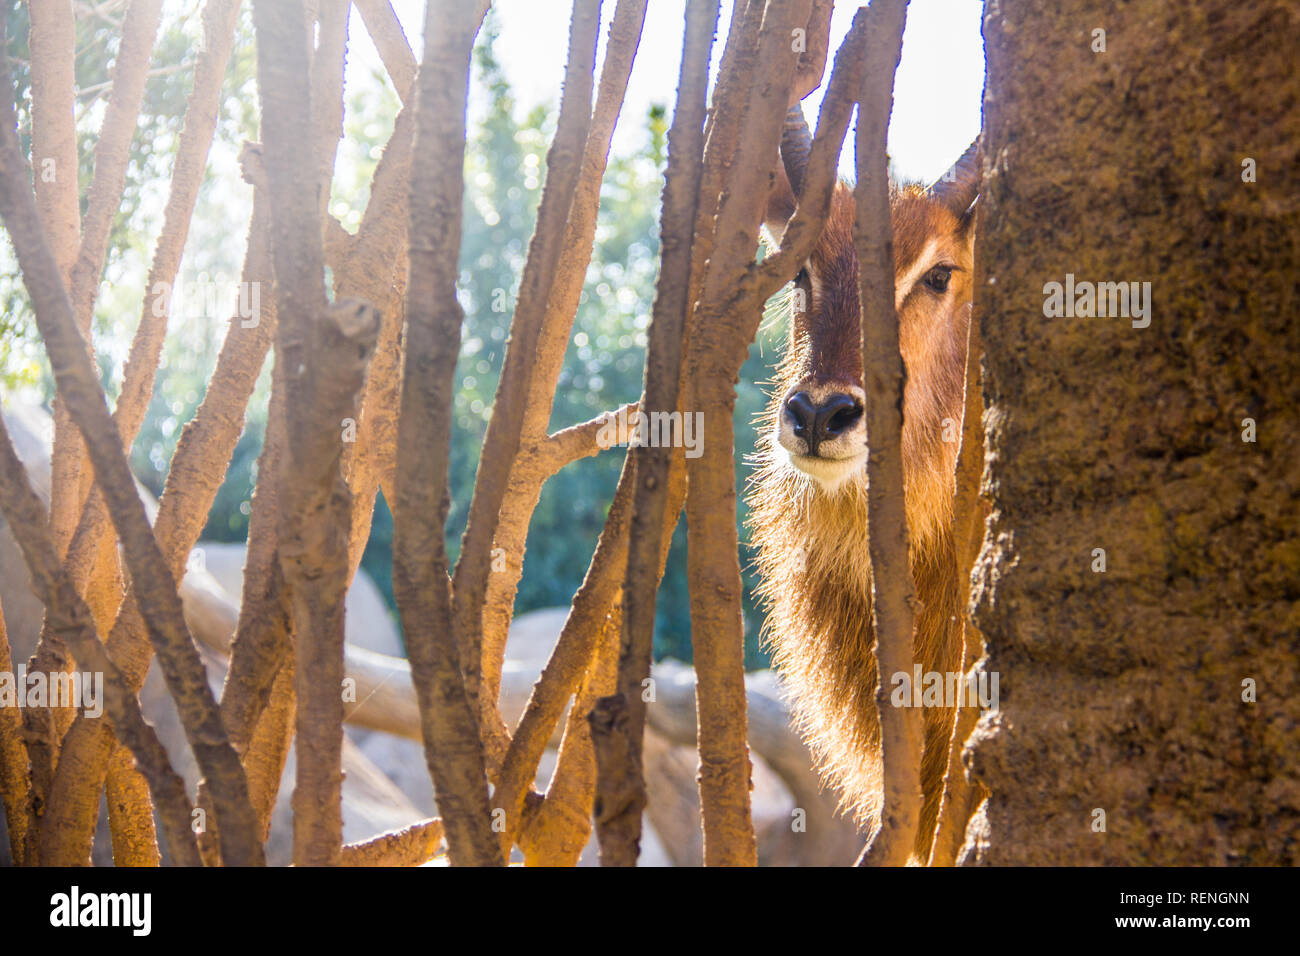 Waterbuck antelope, Kobus ellipsiprymnus, behind a wood fence in a zoo of Spain Stock Photo